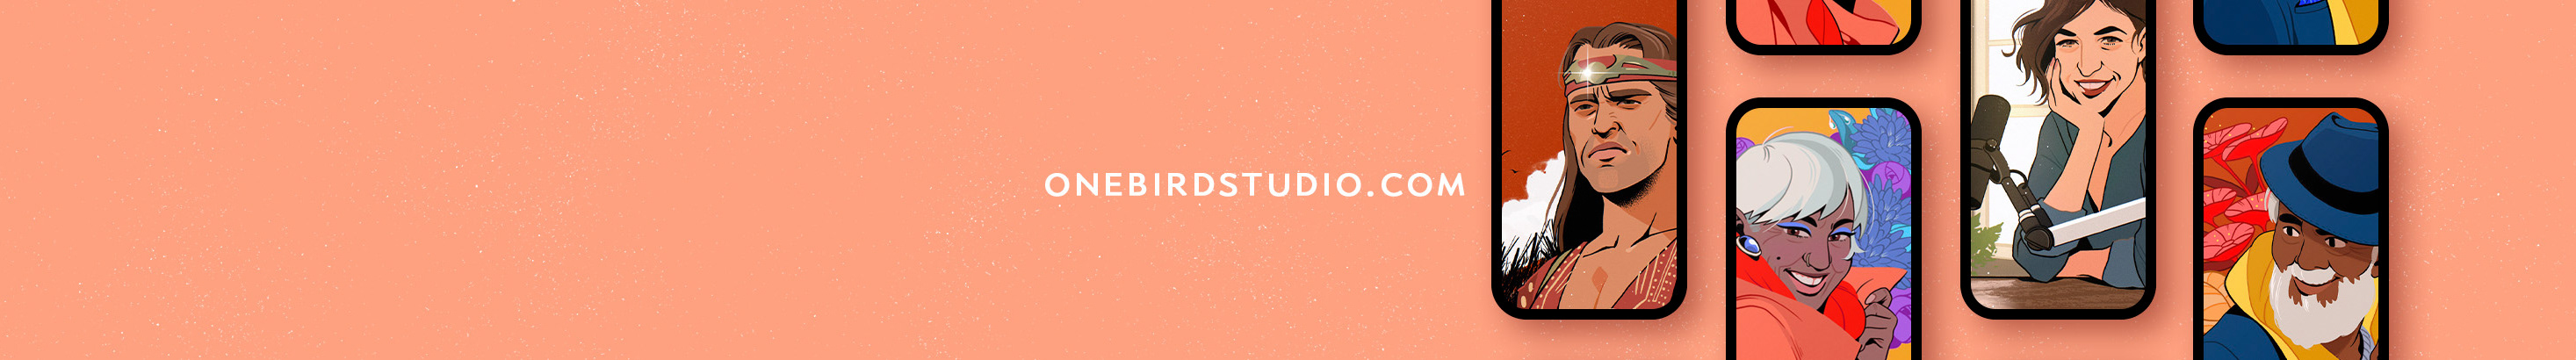 ONEBIRD STUDIO's profile banner